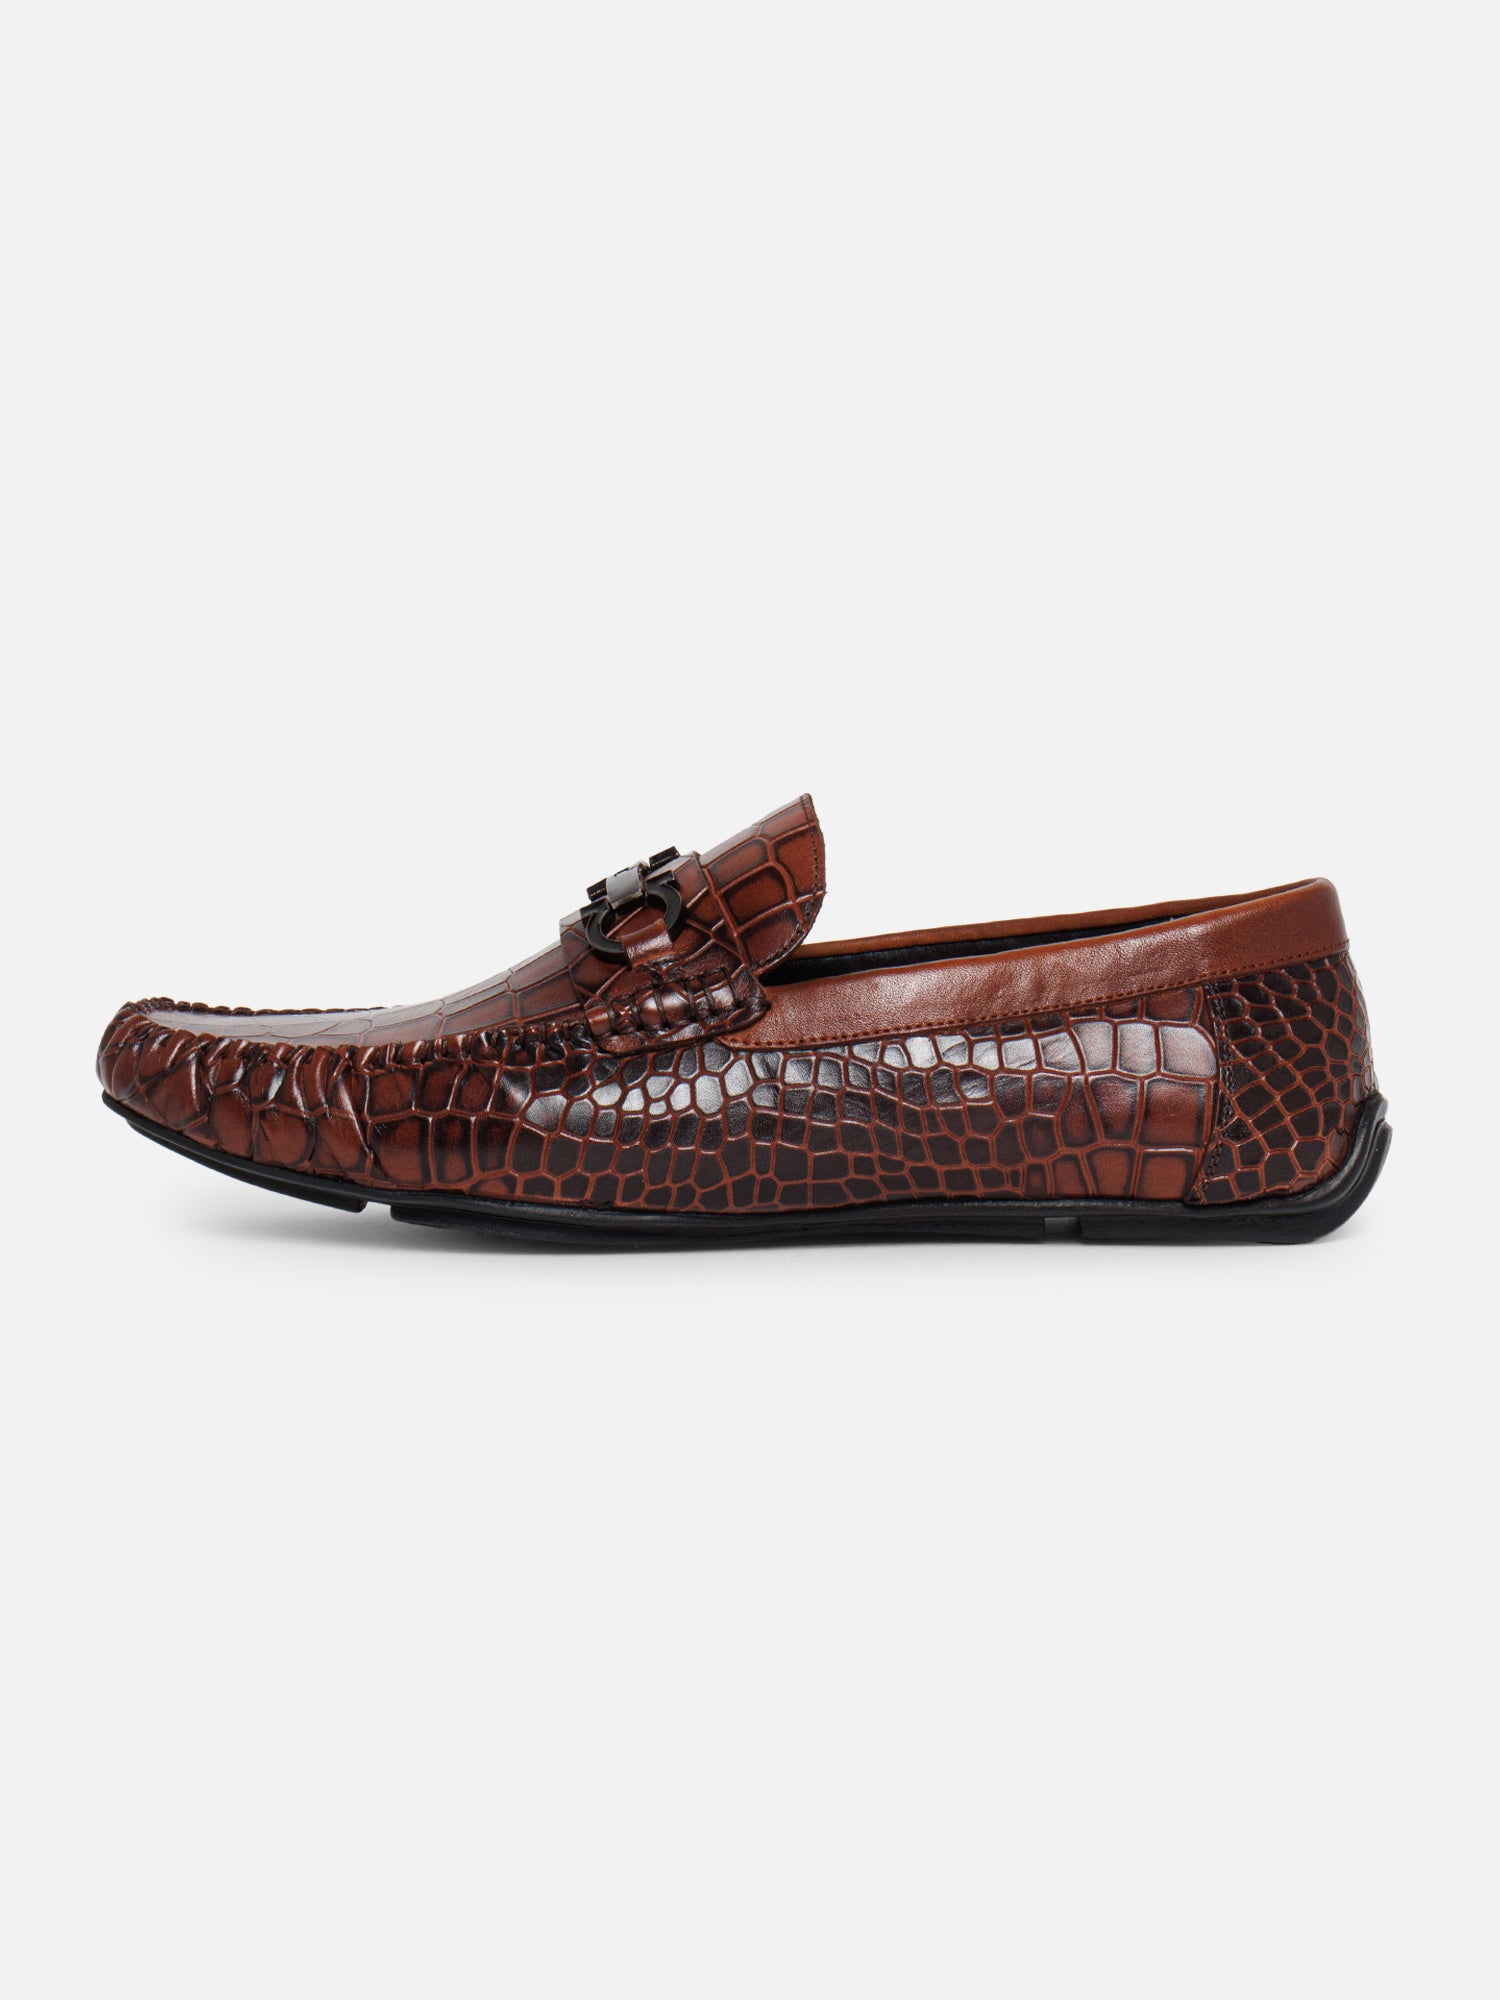 Ezok Leather Loafer Shoes For Men